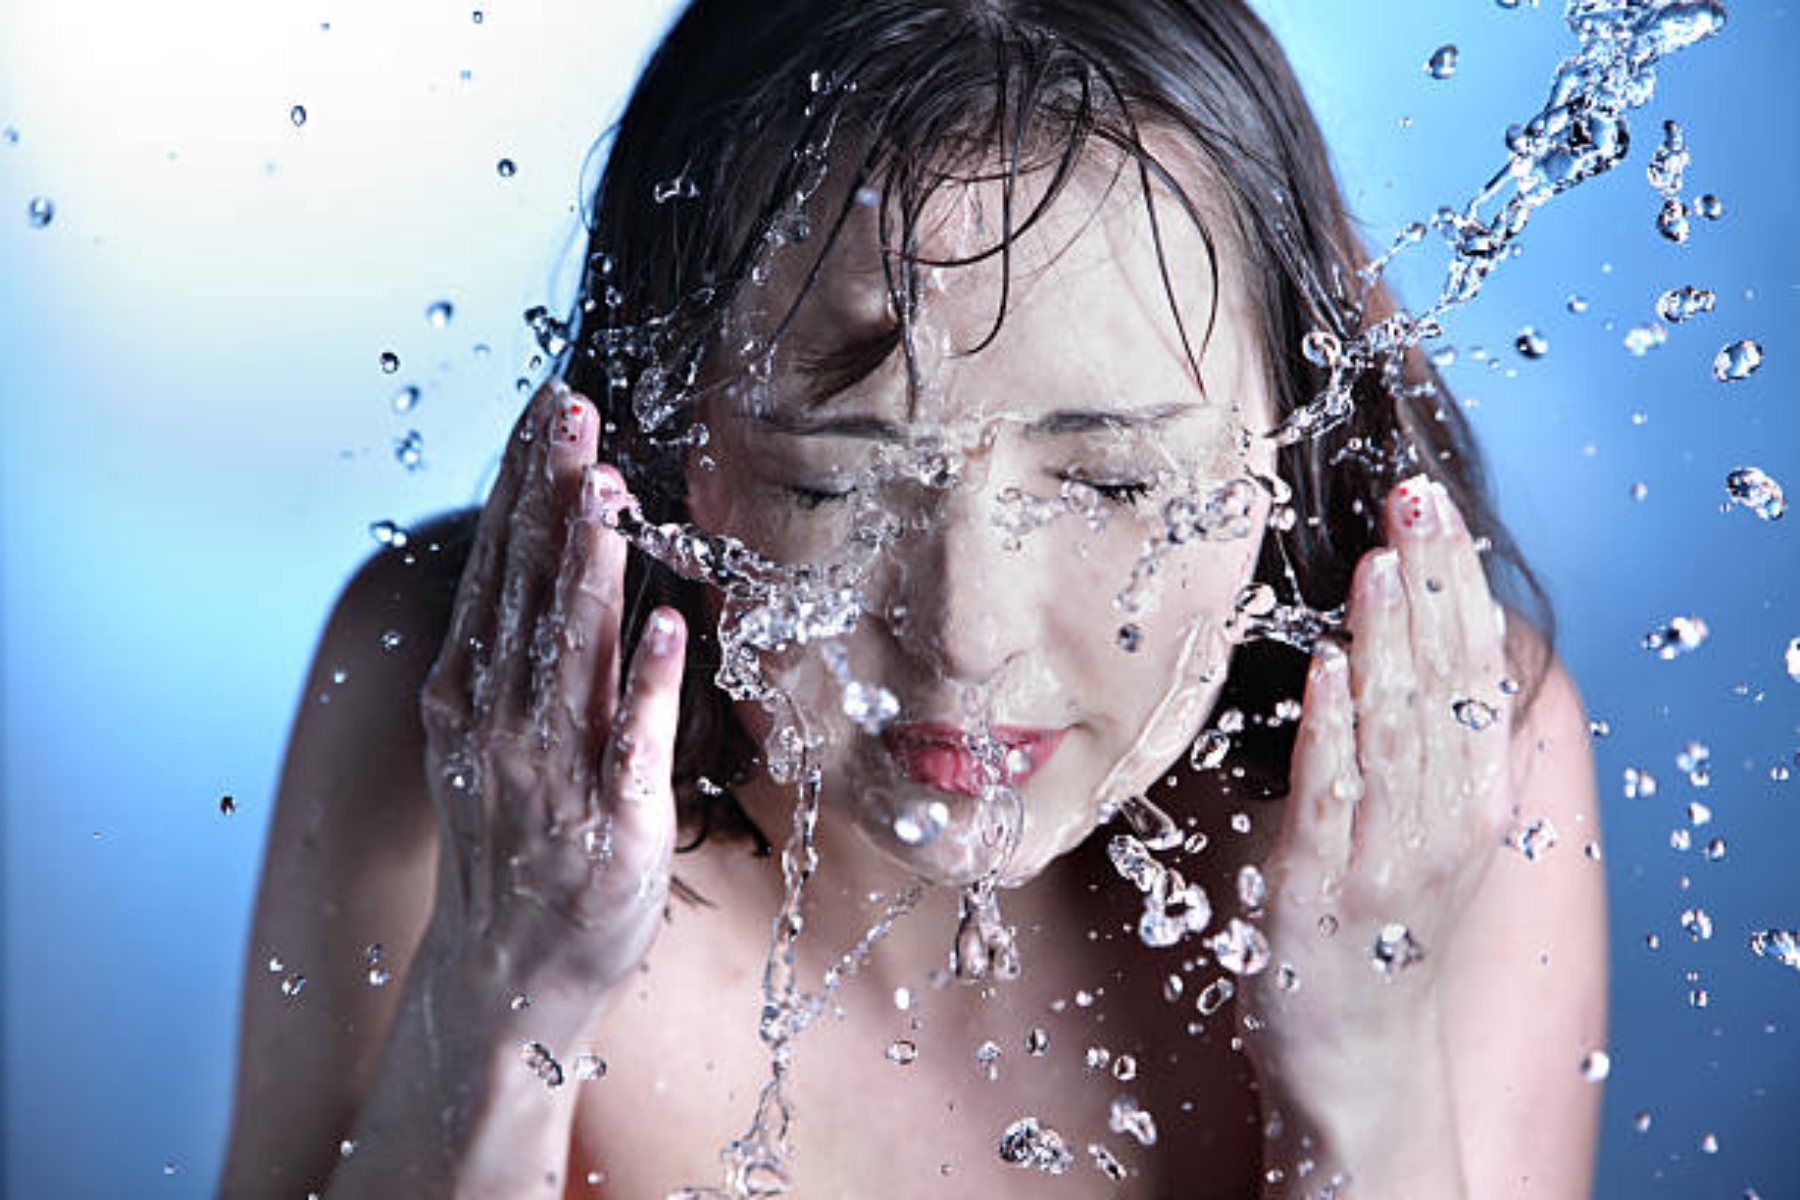 Face beauty: Η βύθιση σε παγωμένο νερό βλάπτει την υφή του δέρματος